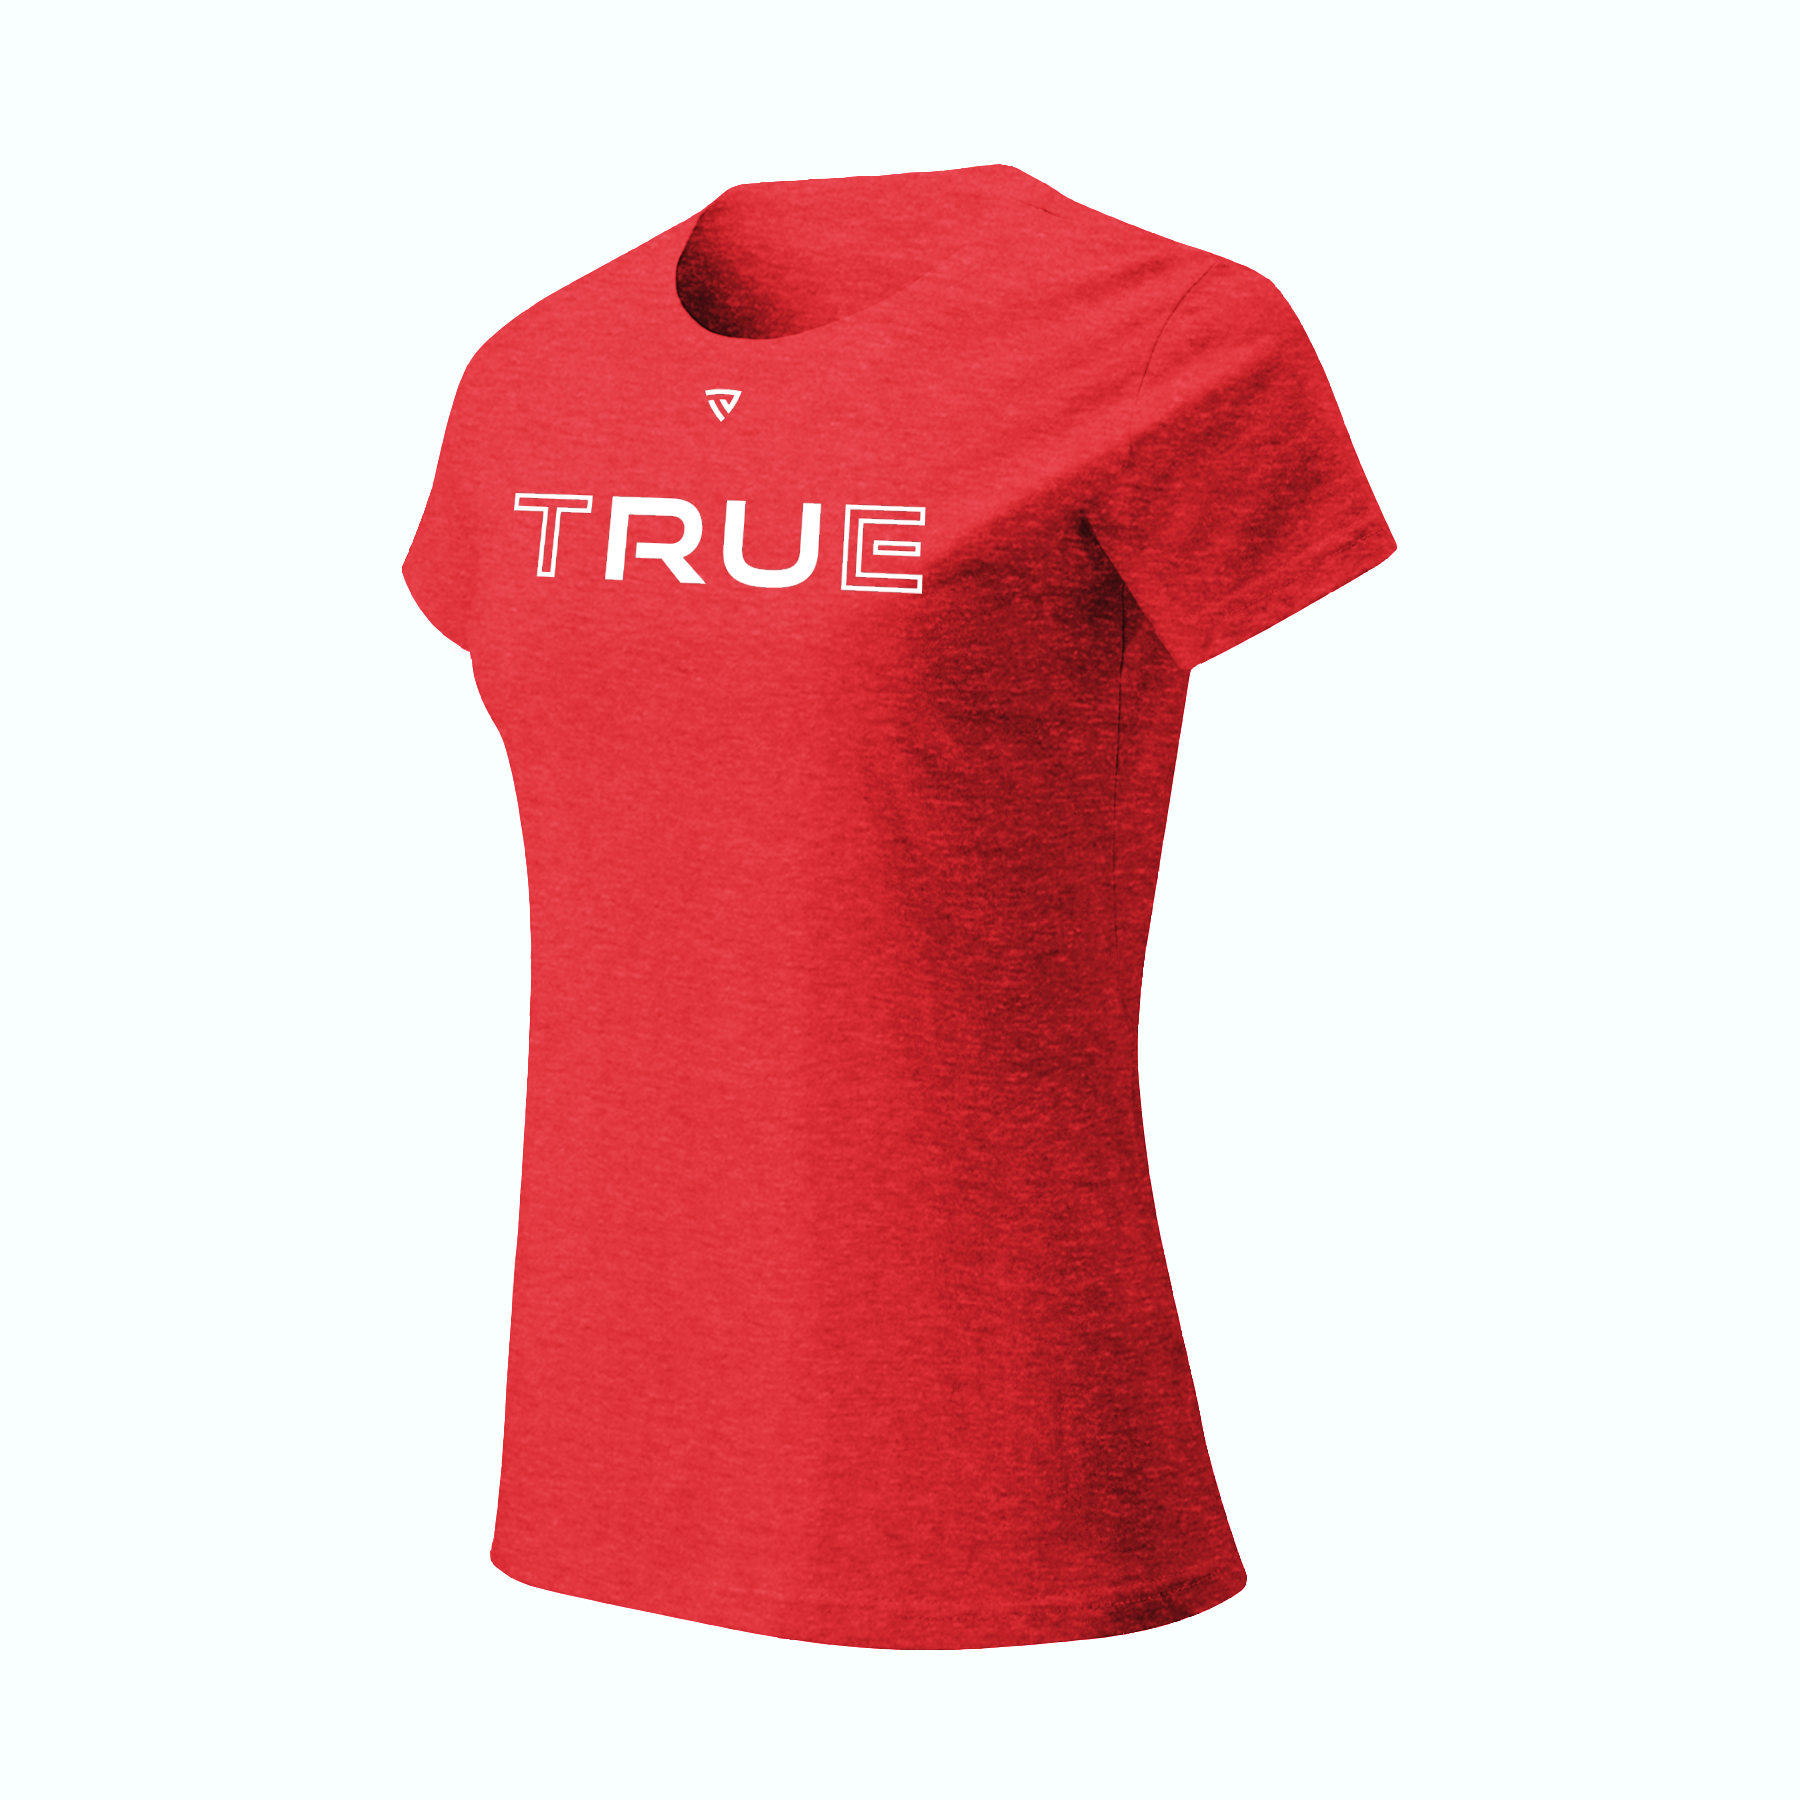 Women's RU TRUE Red Tee